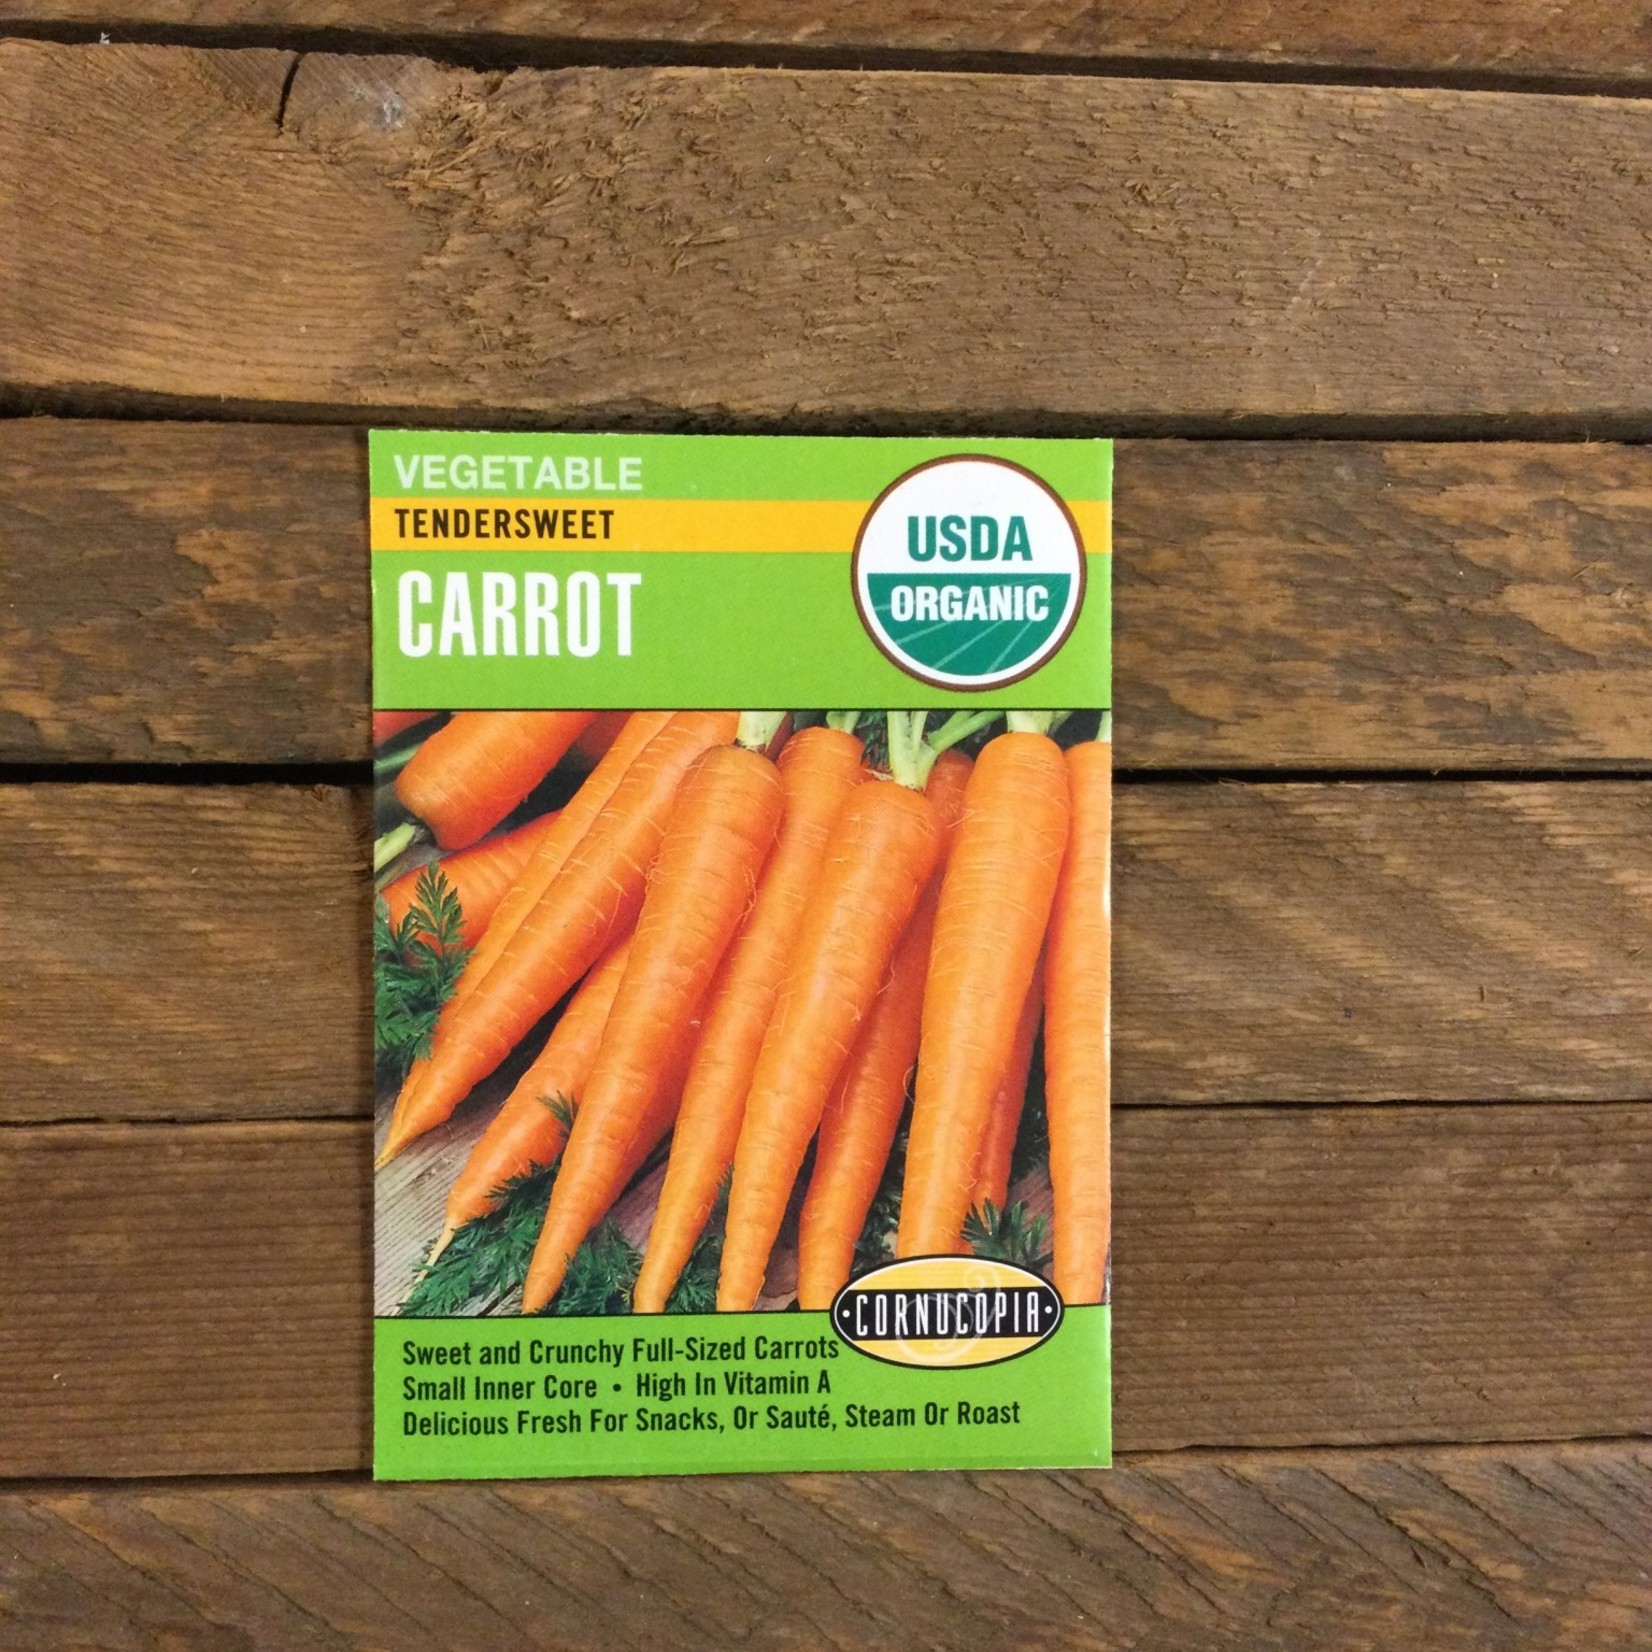 Cornucopia Carrot - Carrot Tendersweet